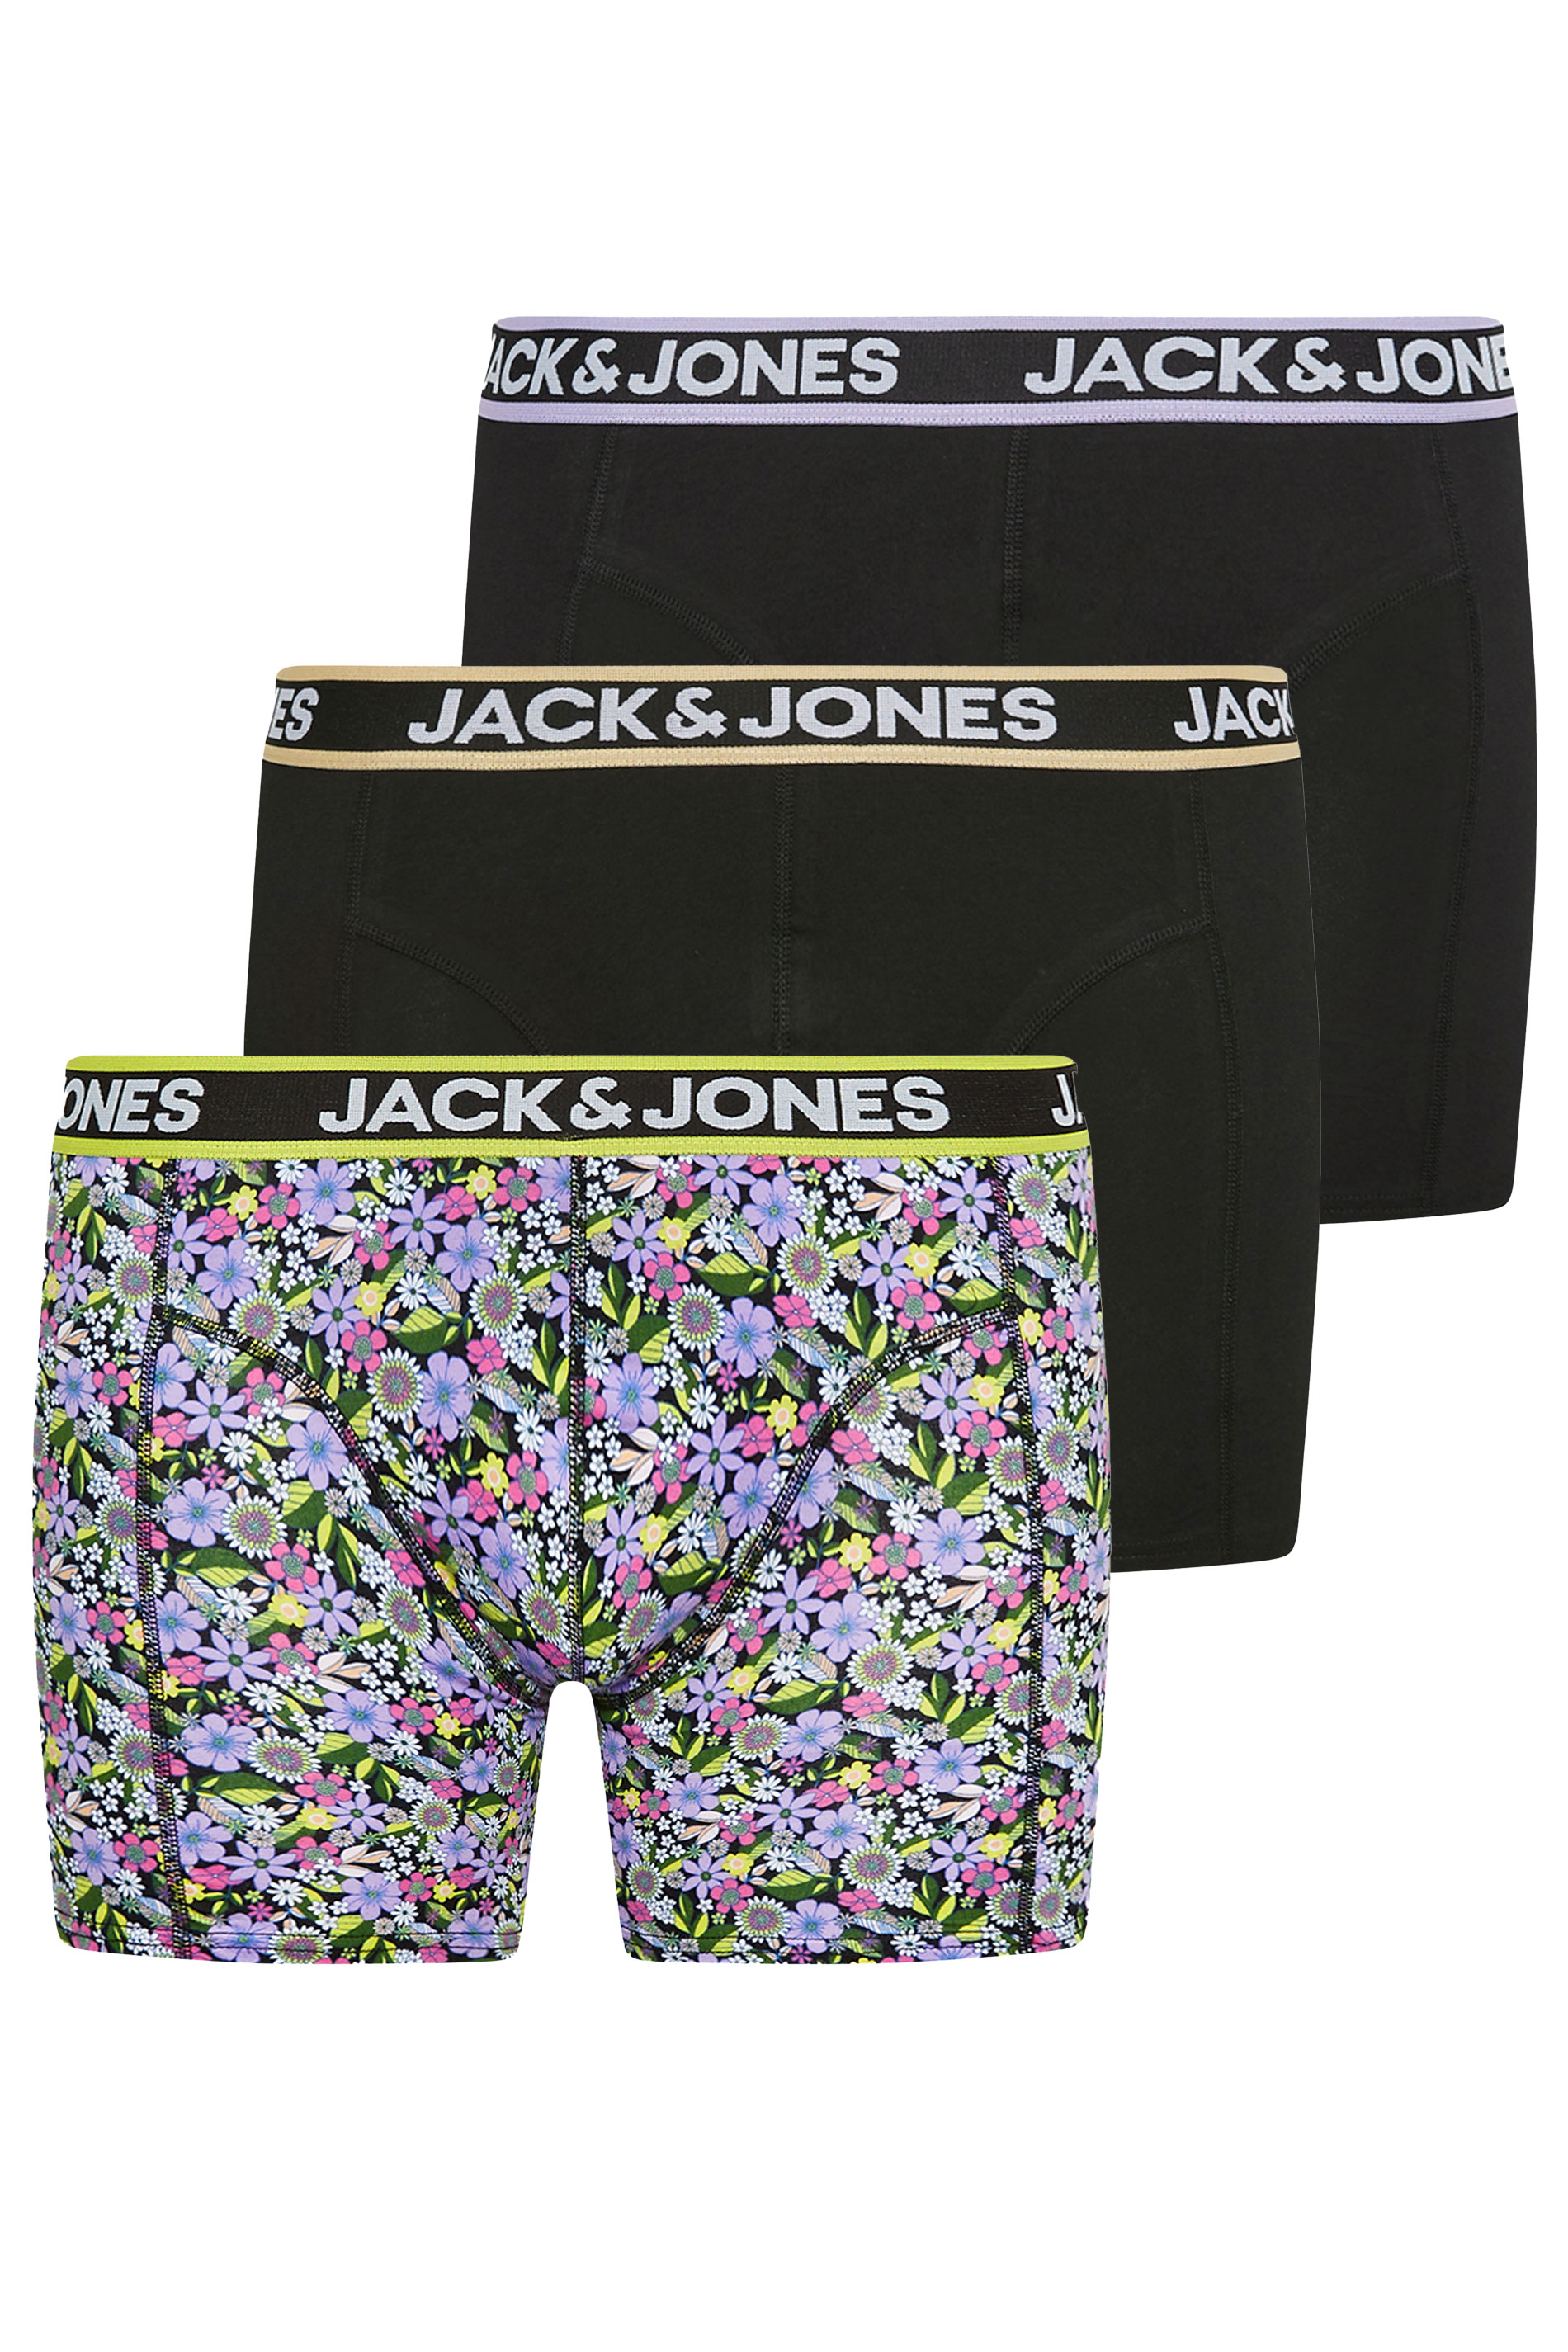 Image of Size 2Xl Mens Jack & Jones Black Floral & Plain 3 Pack Trunks Big & Tall